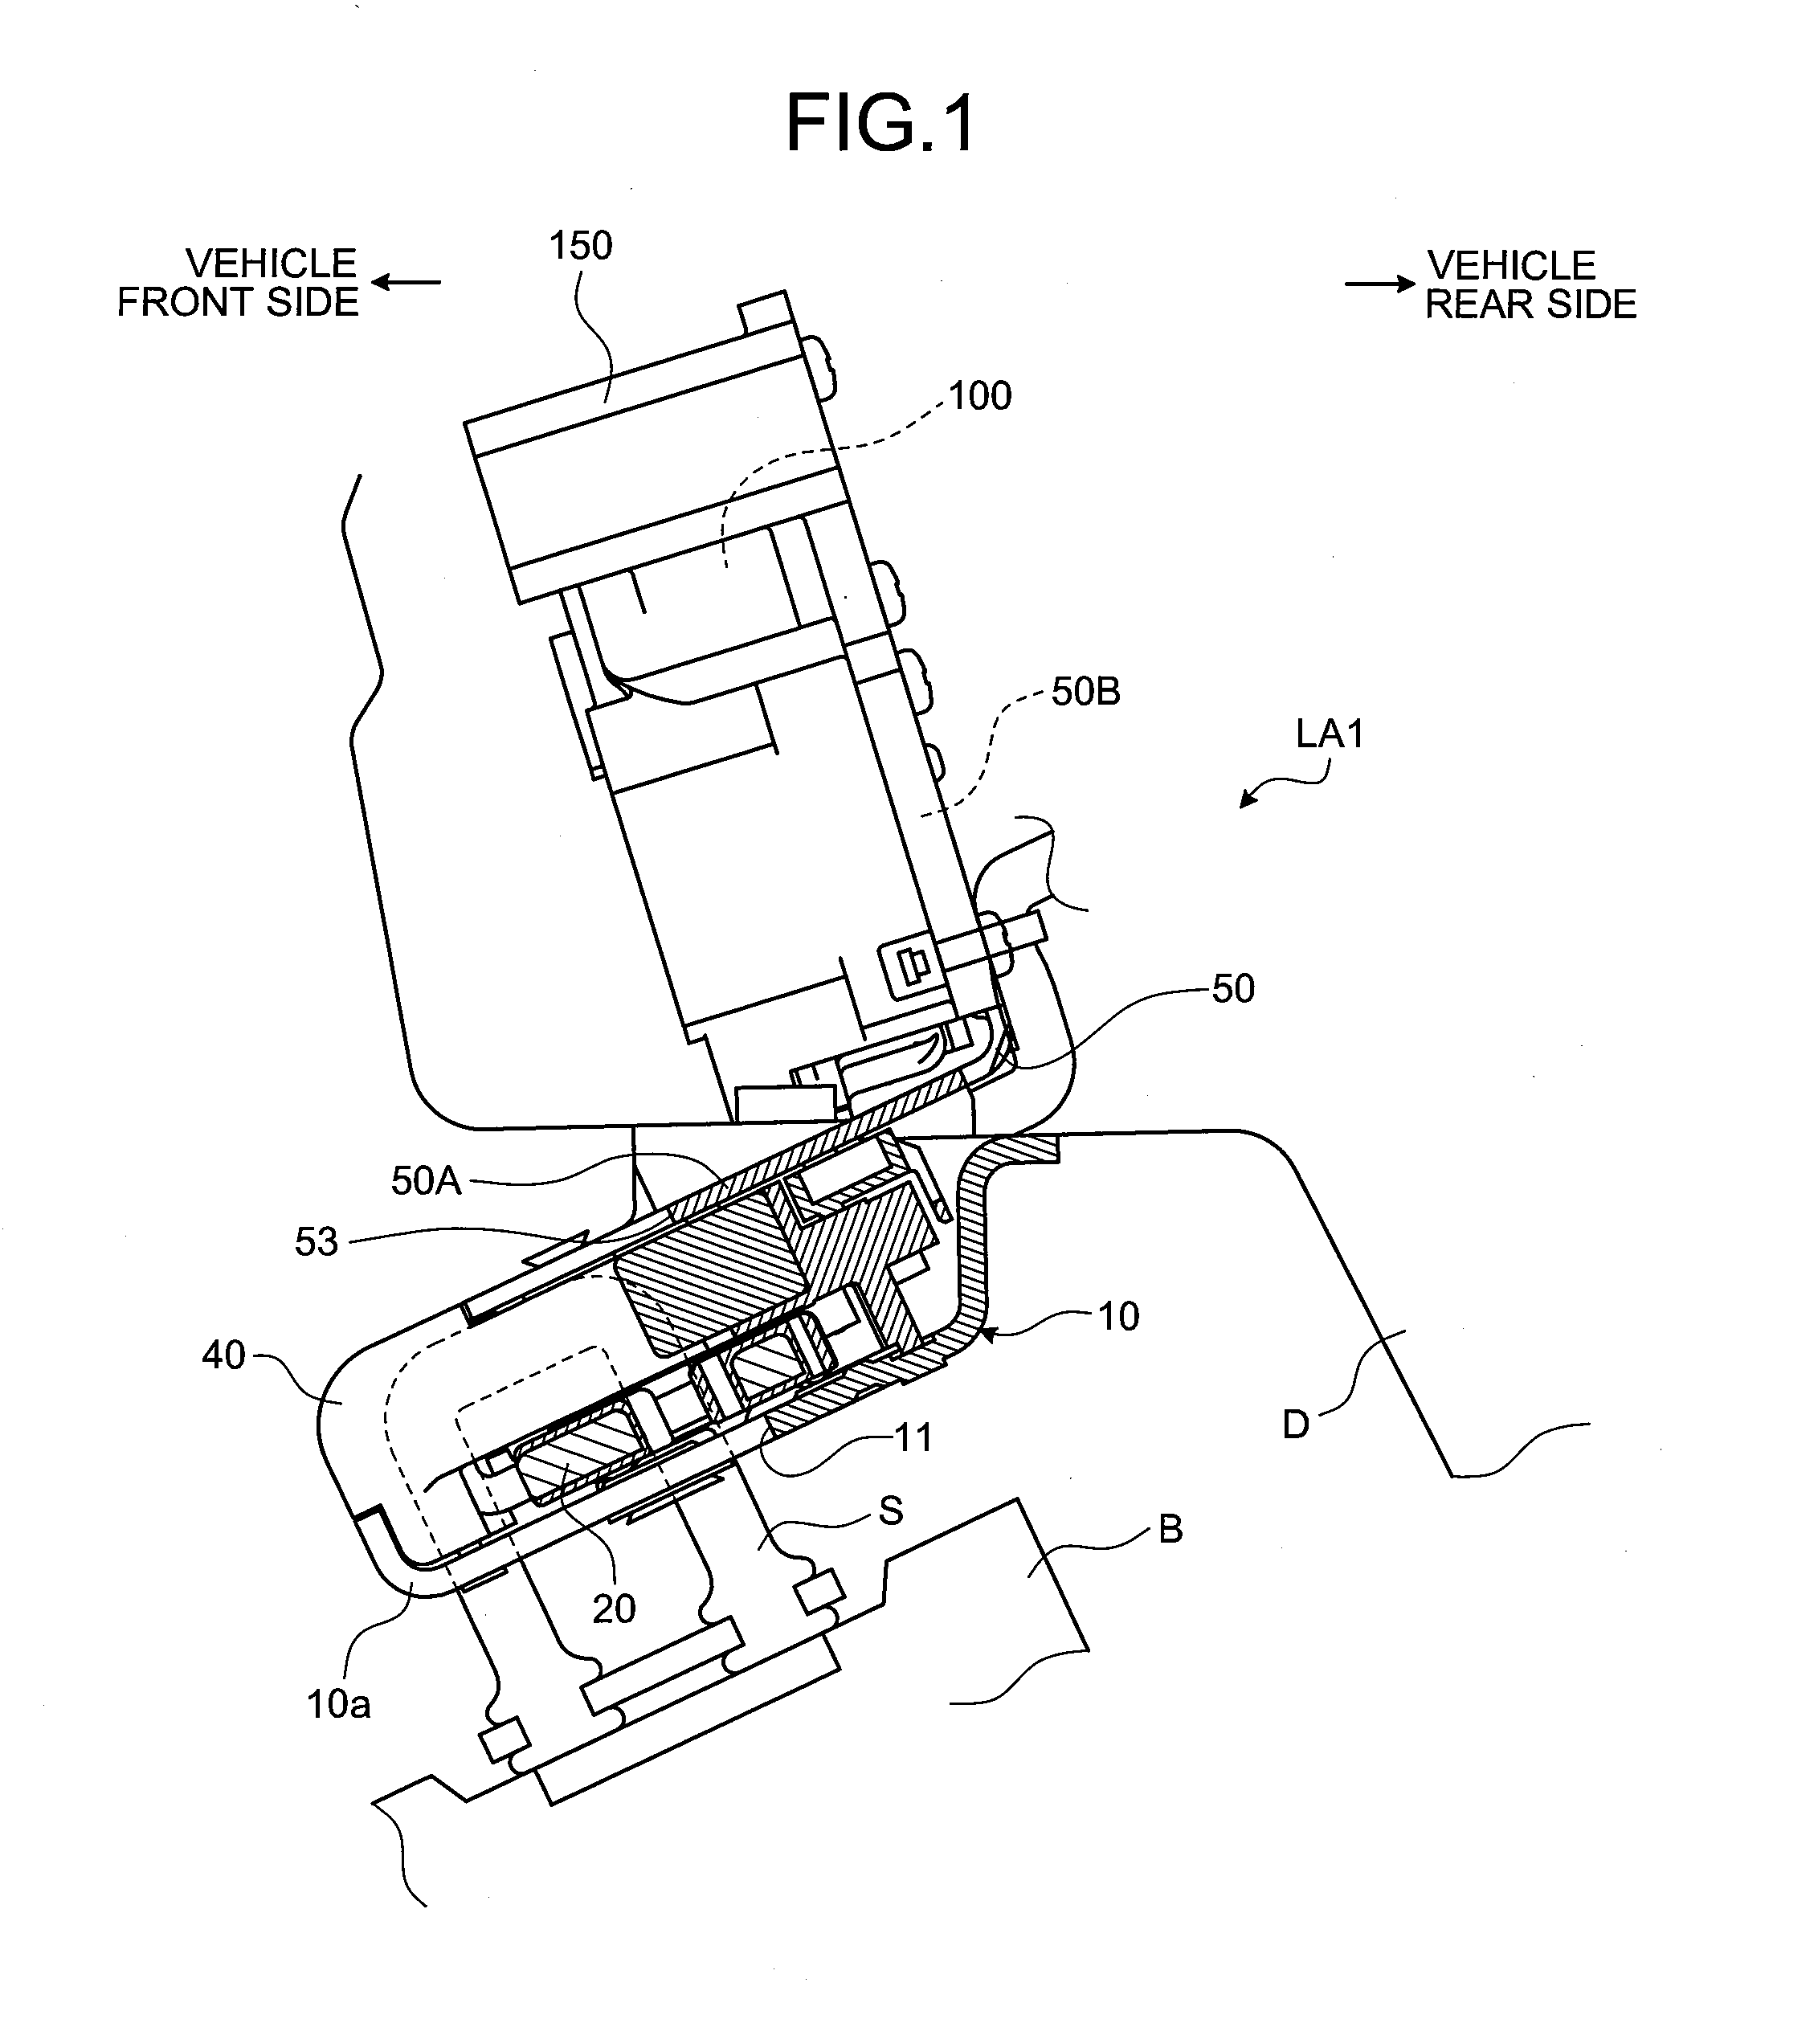 Vehicle latch device